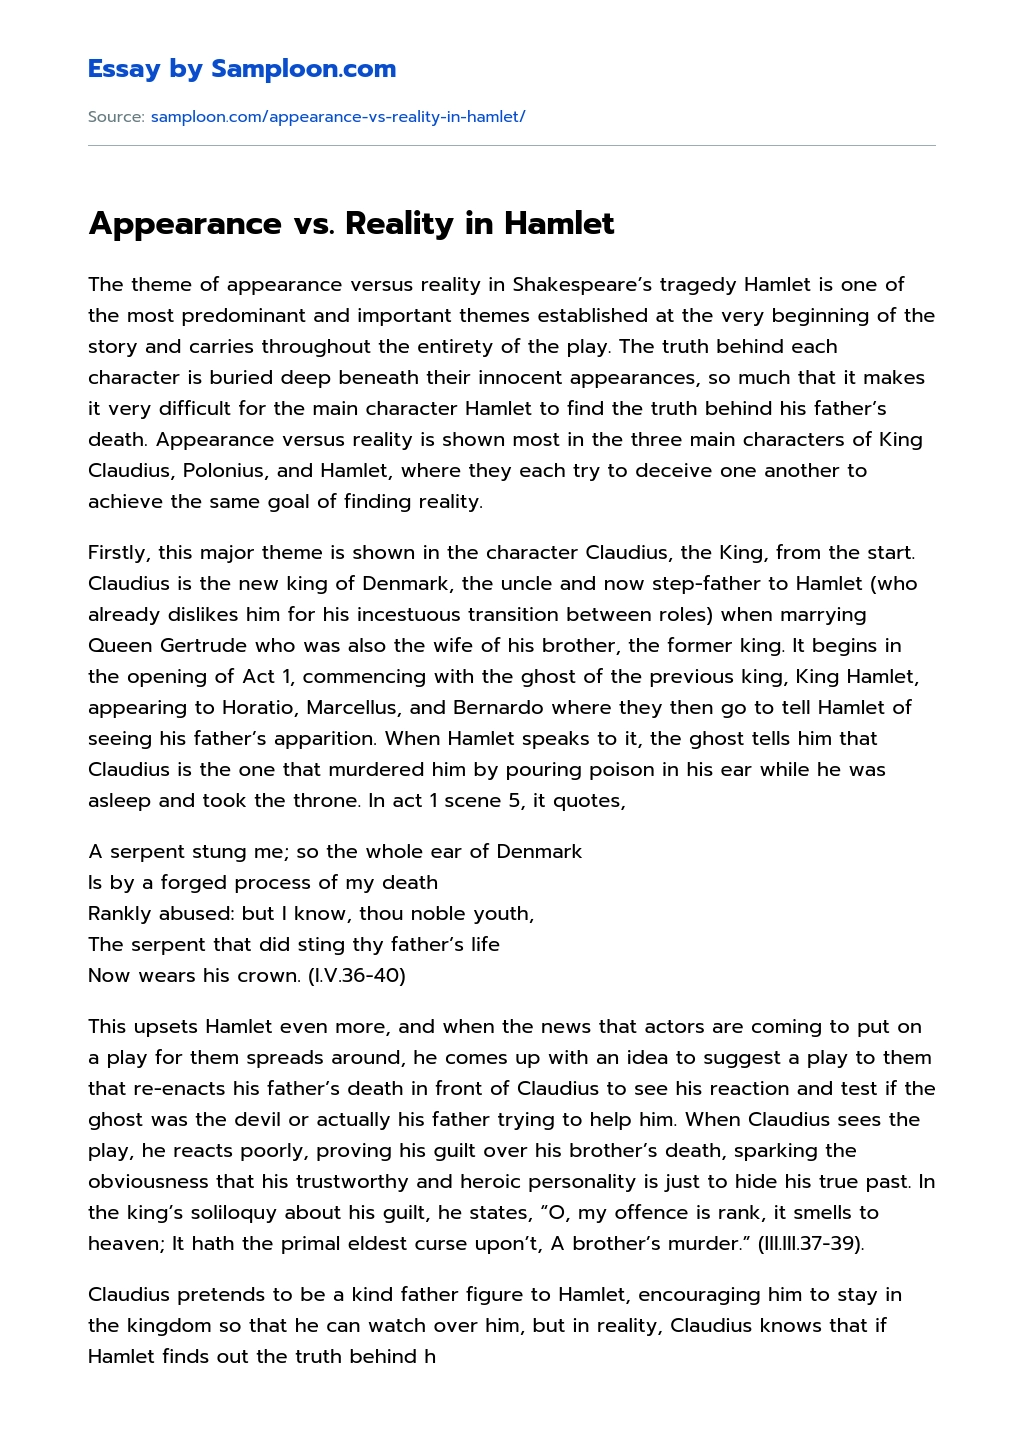 Appearance vs. Reality in Hamlet essay